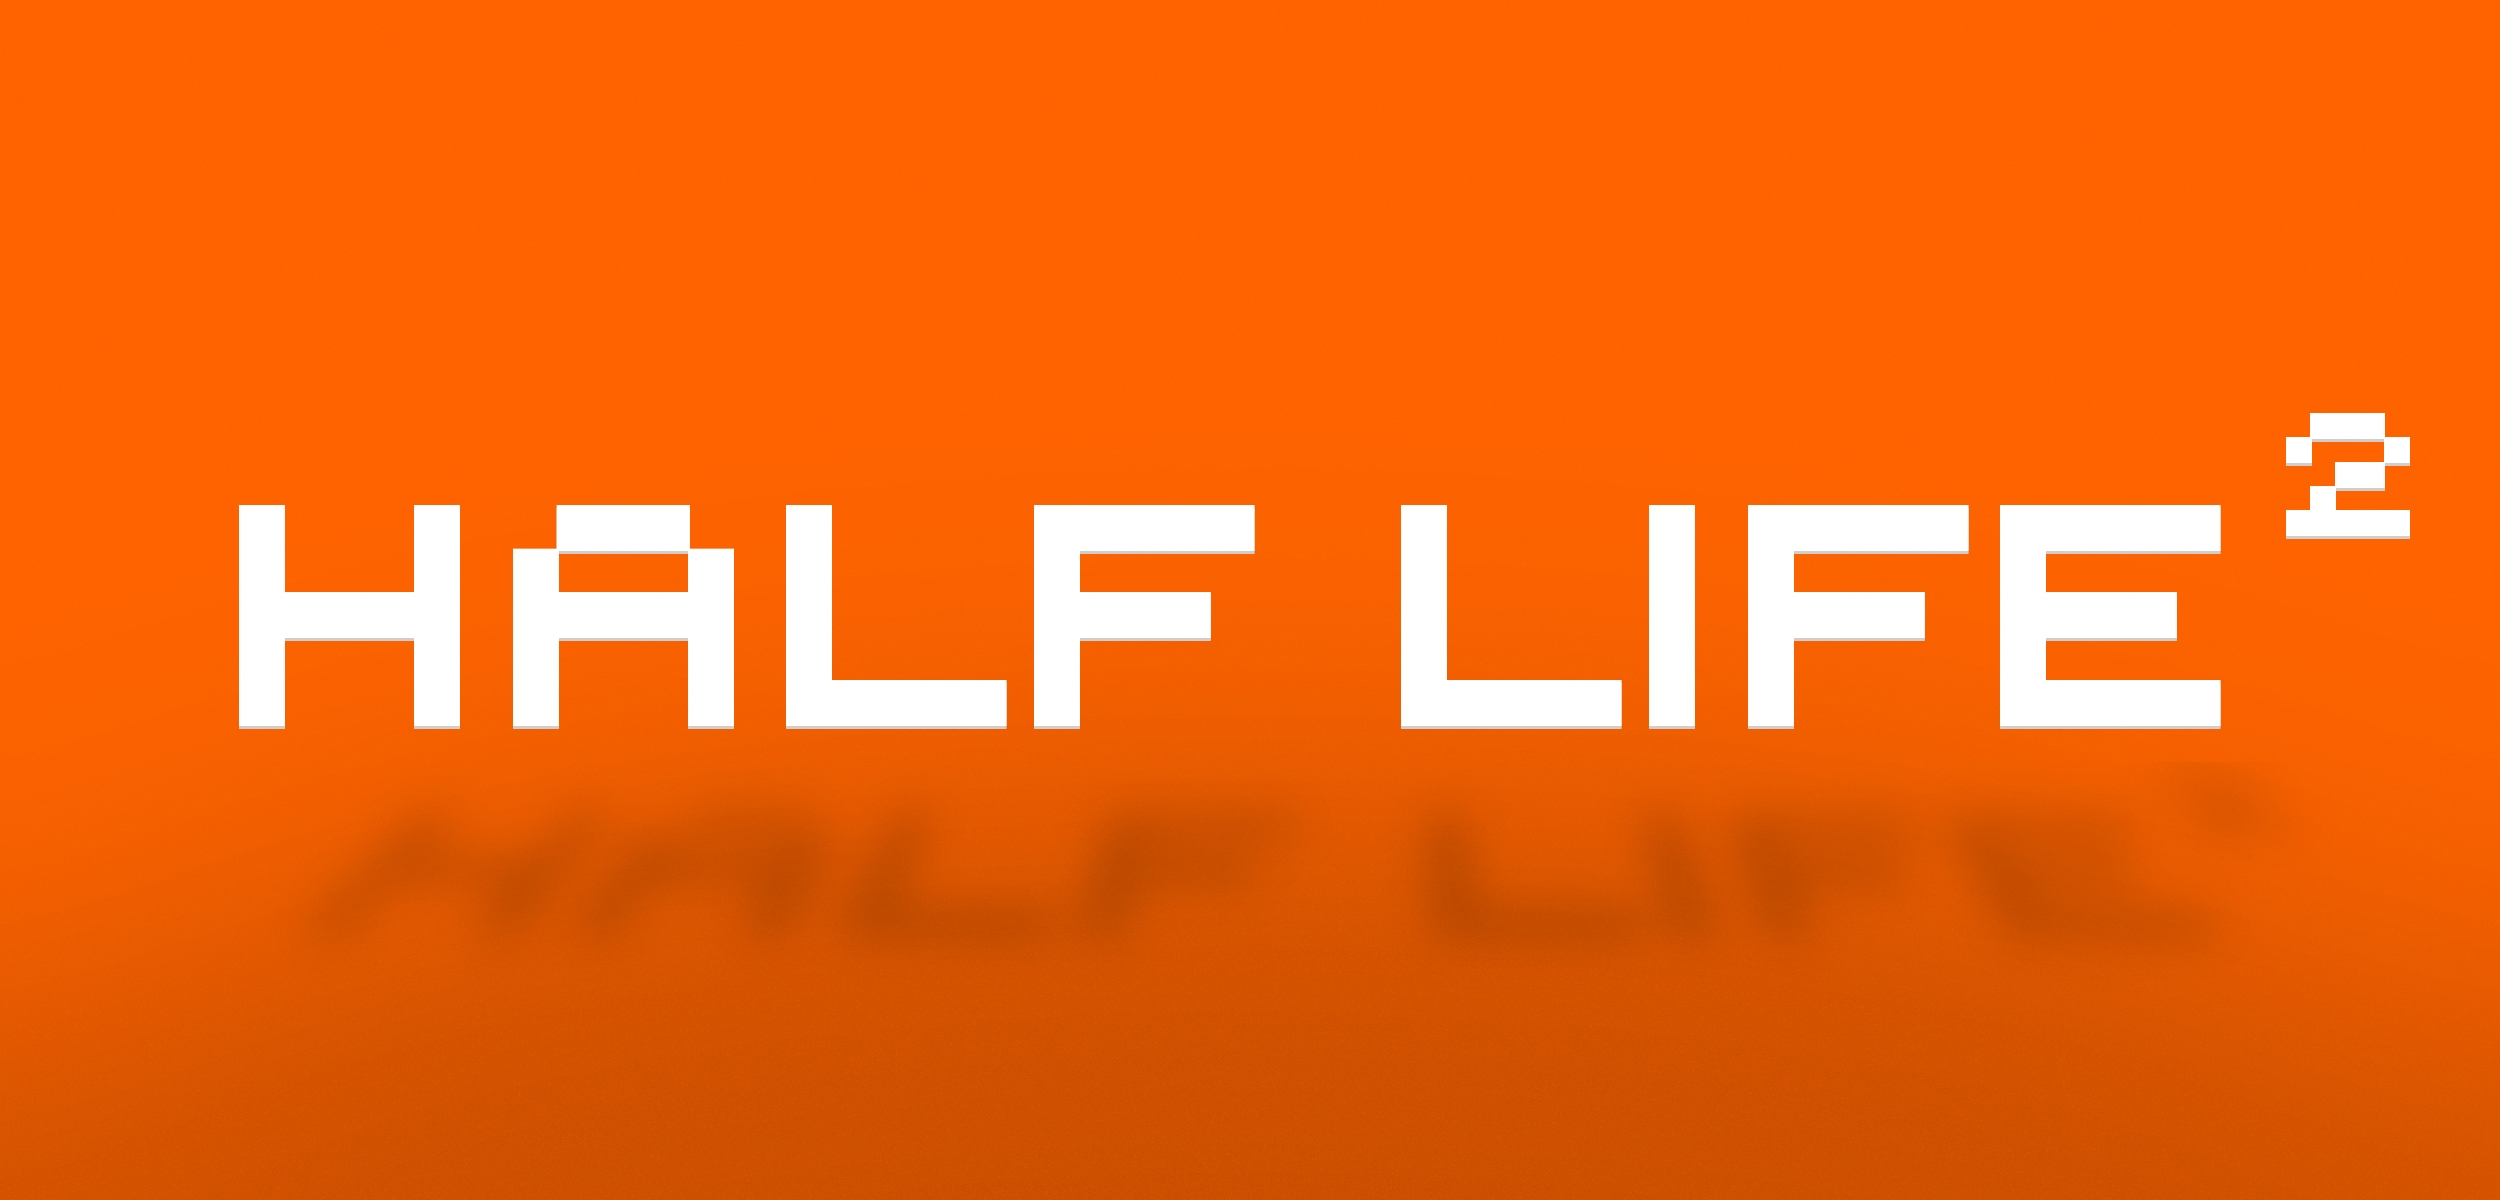 Half-life-themed video game desktop wallpaper by insainabyss.